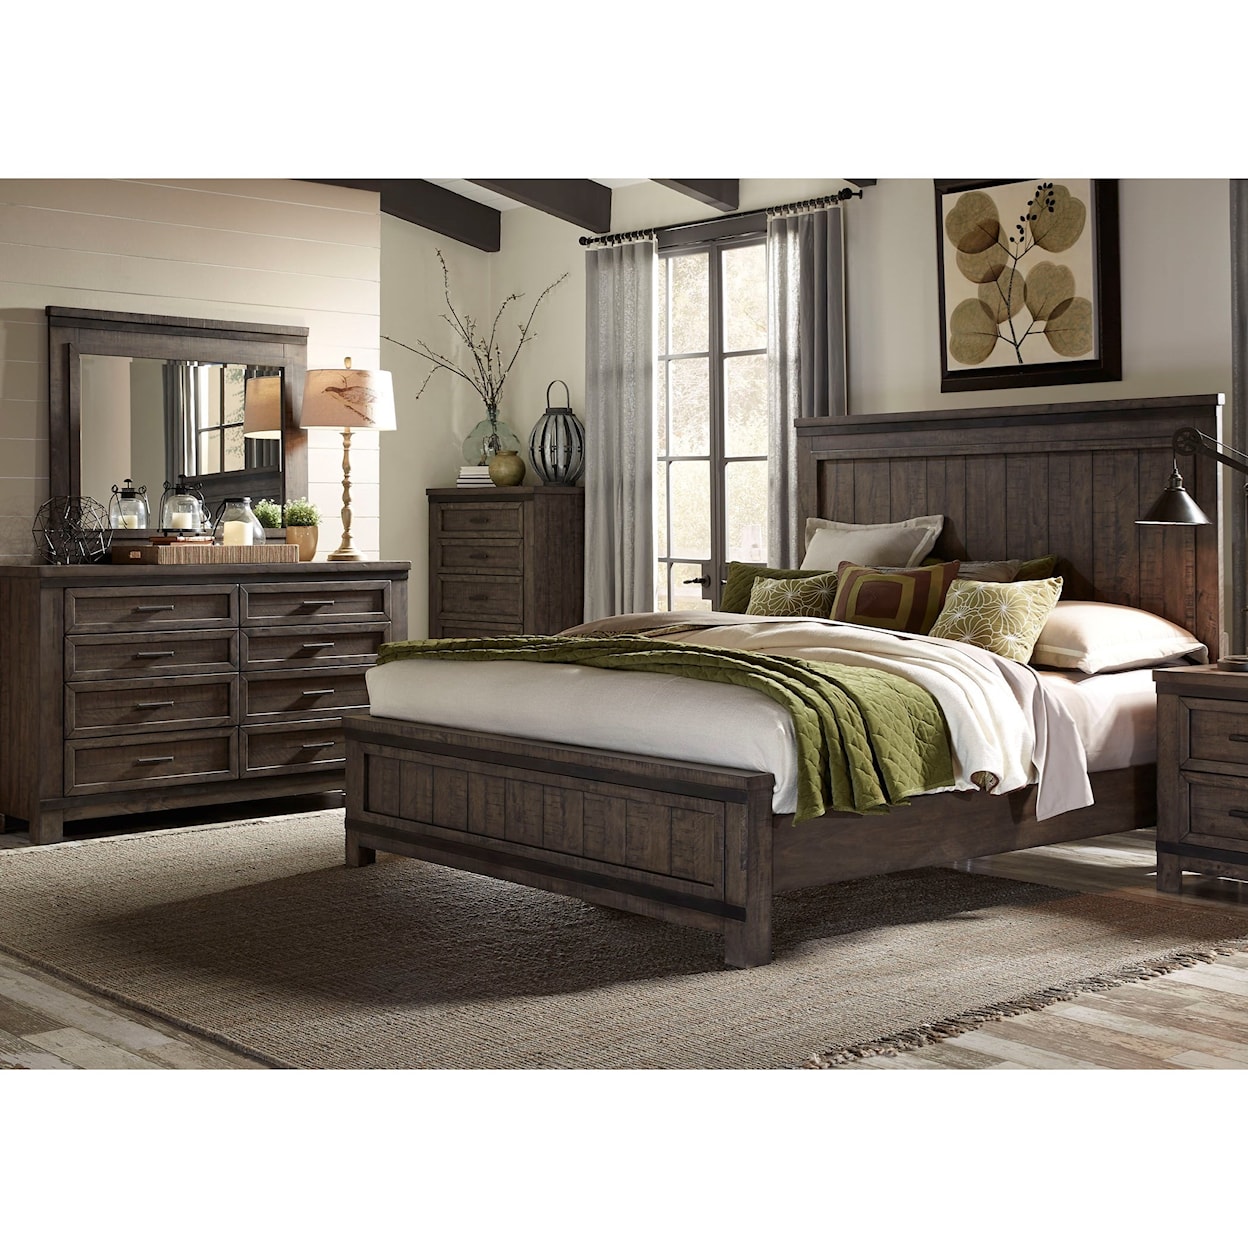 Liberty Furniture Thornwood Hills California King Bedroom Group